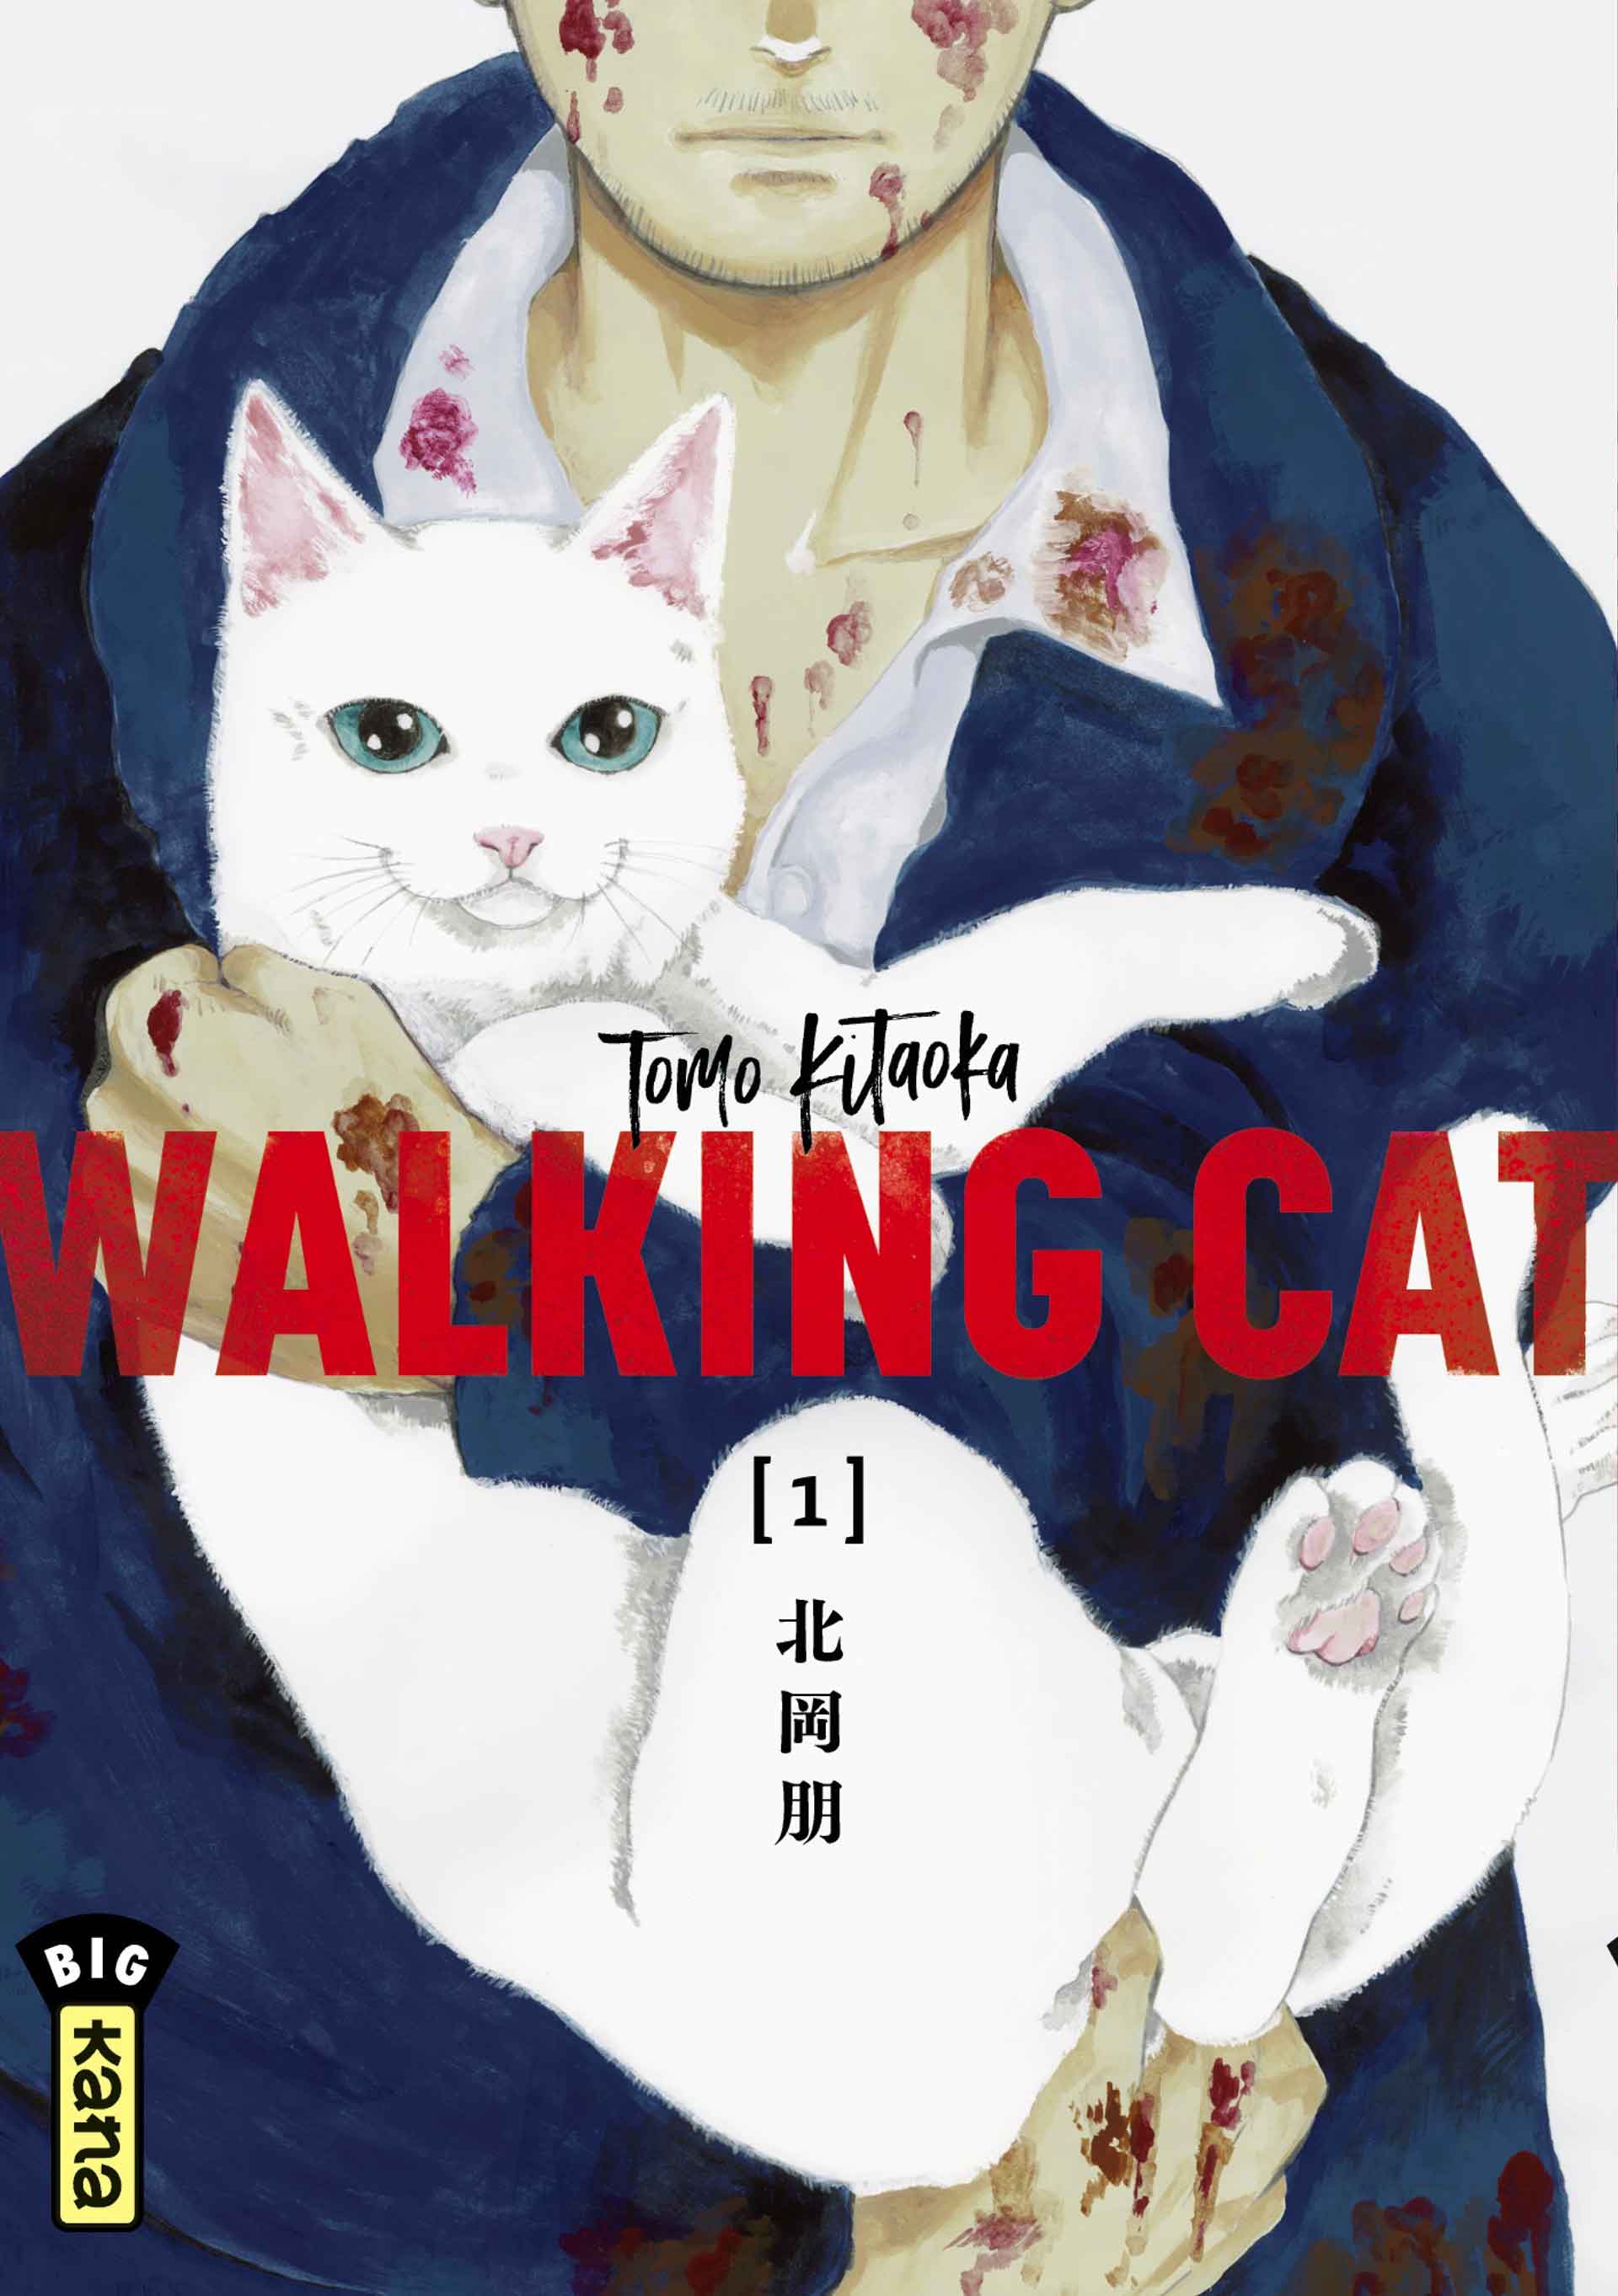 Walking-cat-cover